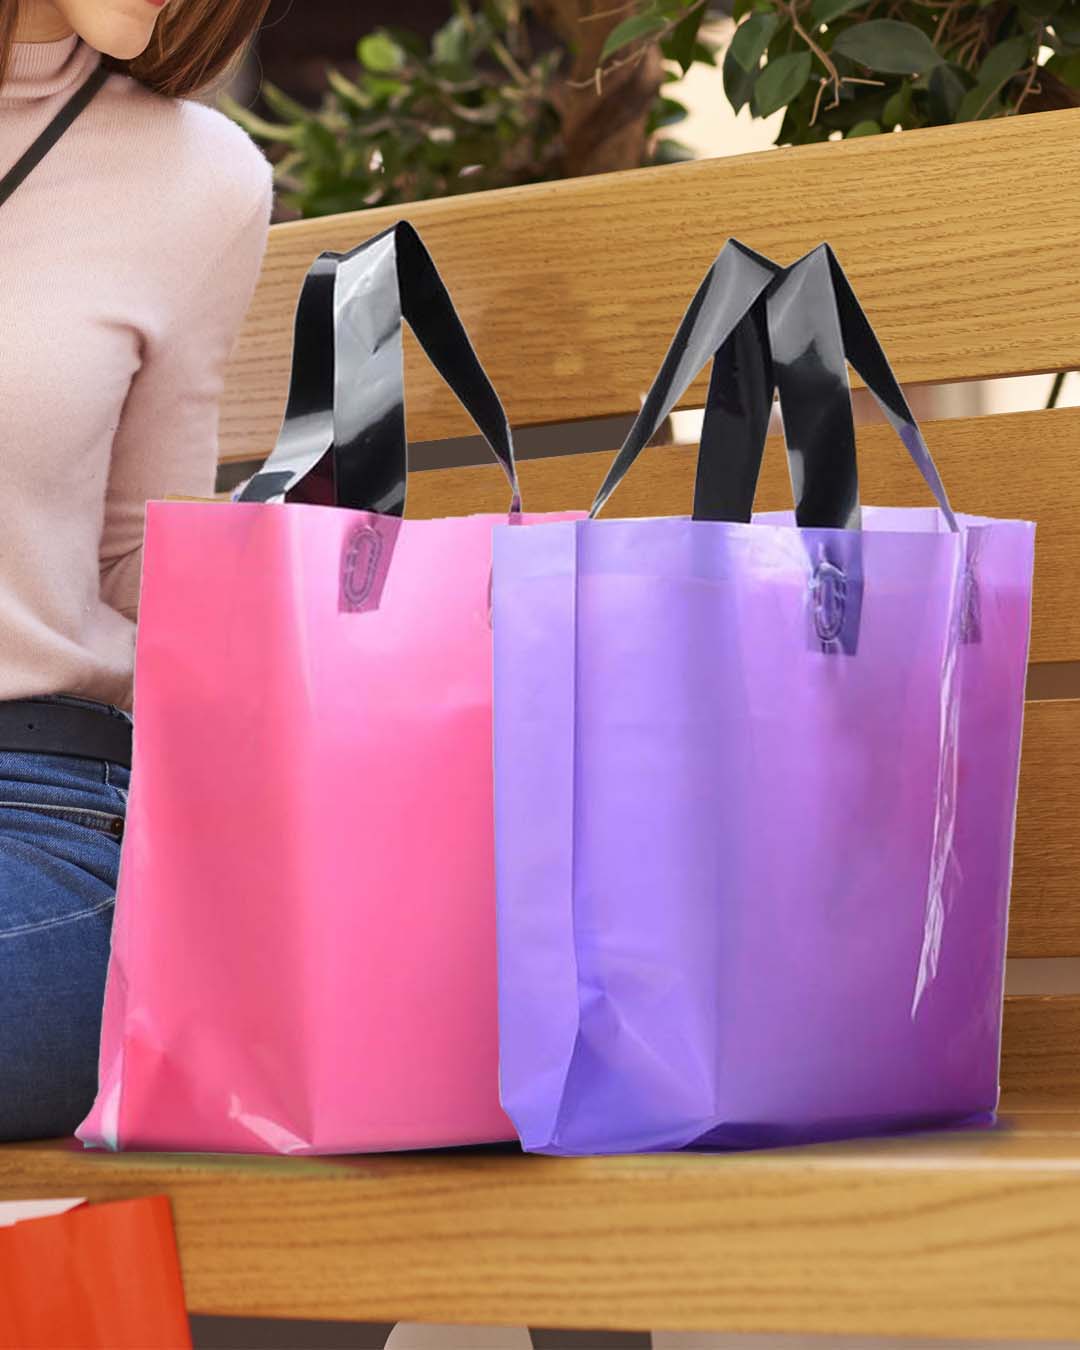 Plastic Boutique Shopping Bags 45x35cm 120mic